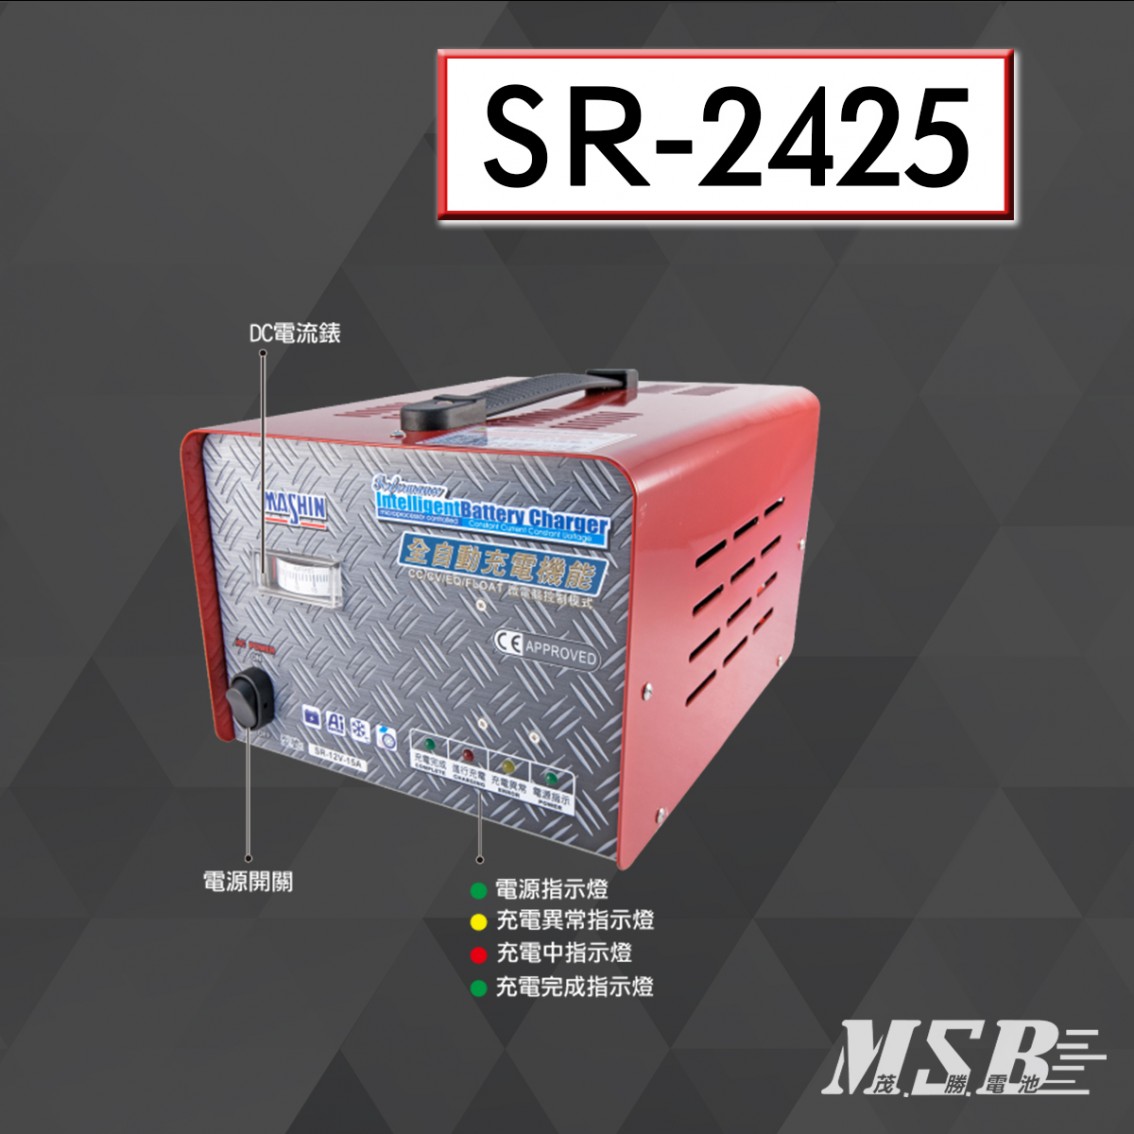 SR-2425